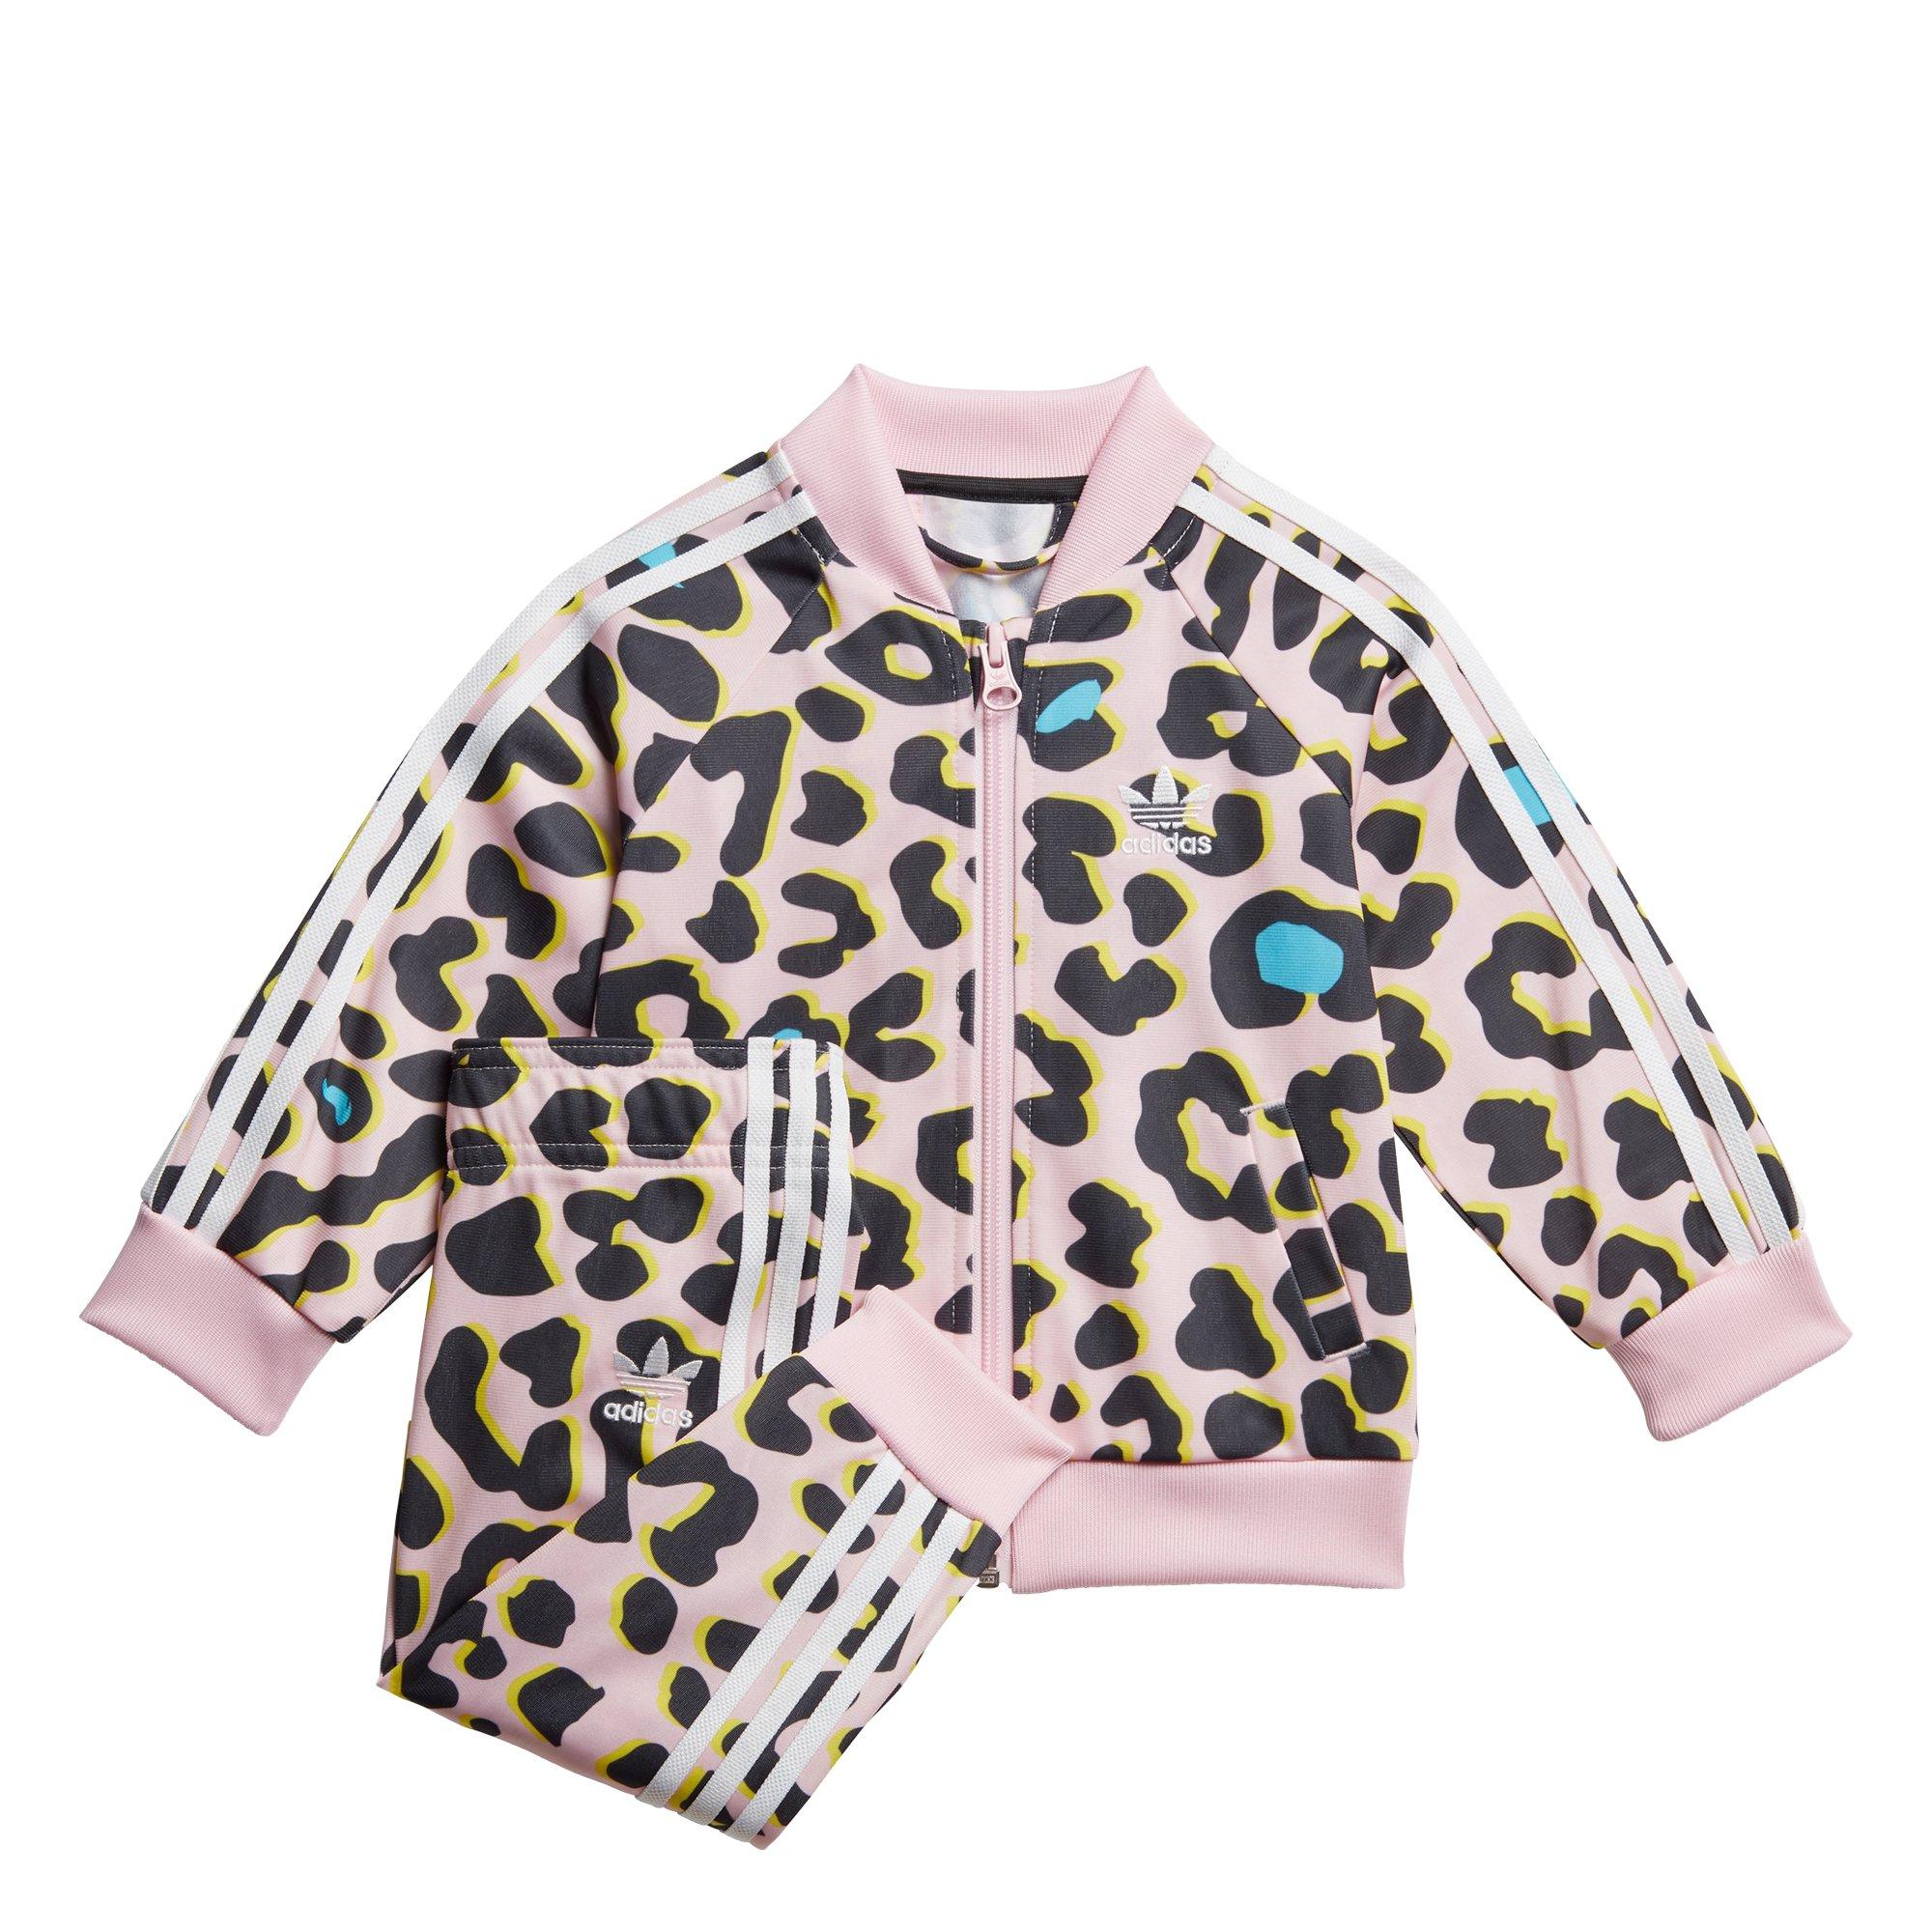 girls leopard print adidas